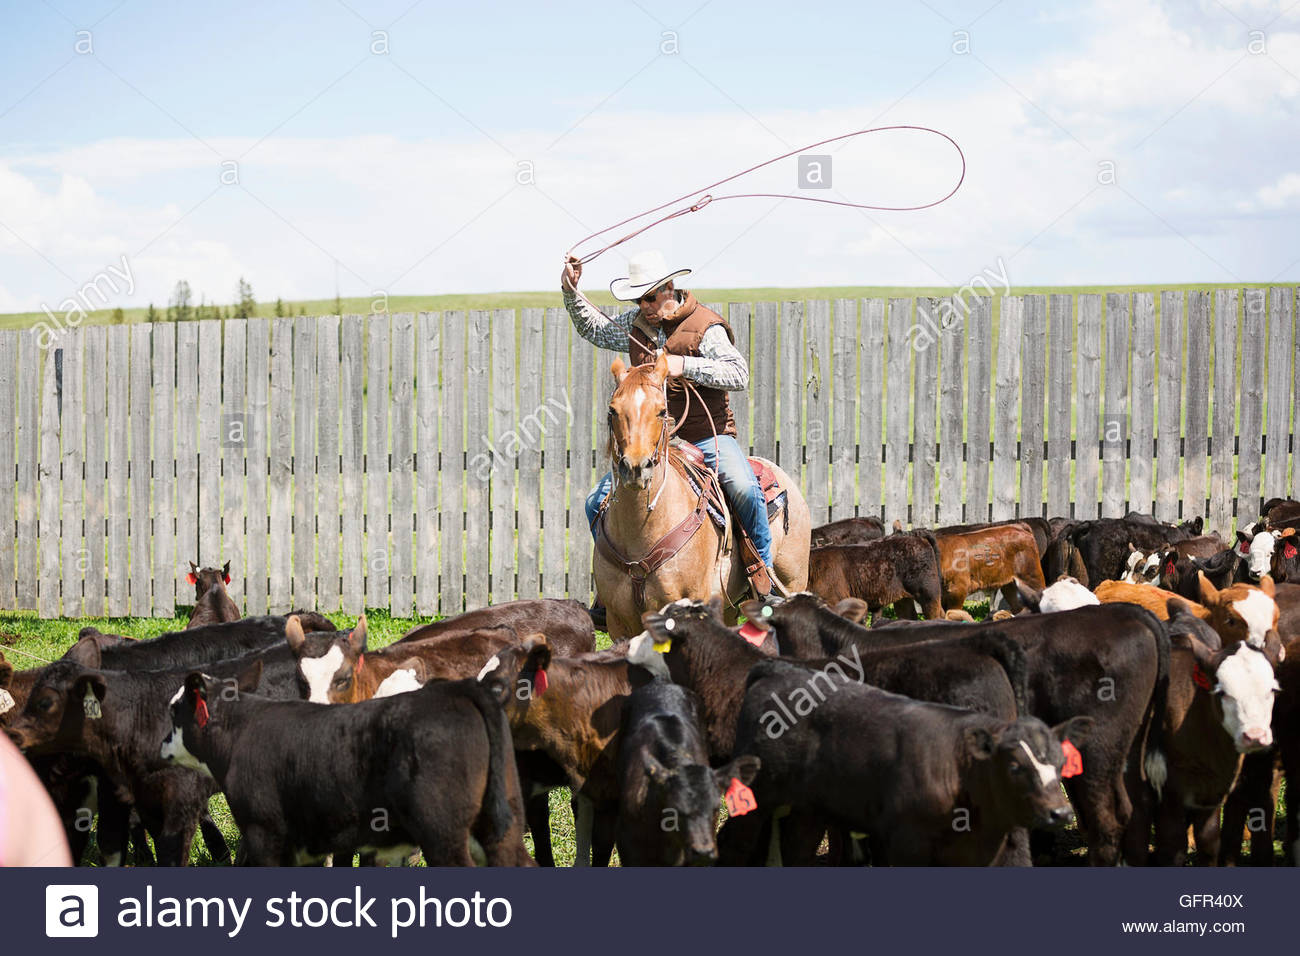 Cattle rancher on horseback lassoing cows Stock Photo